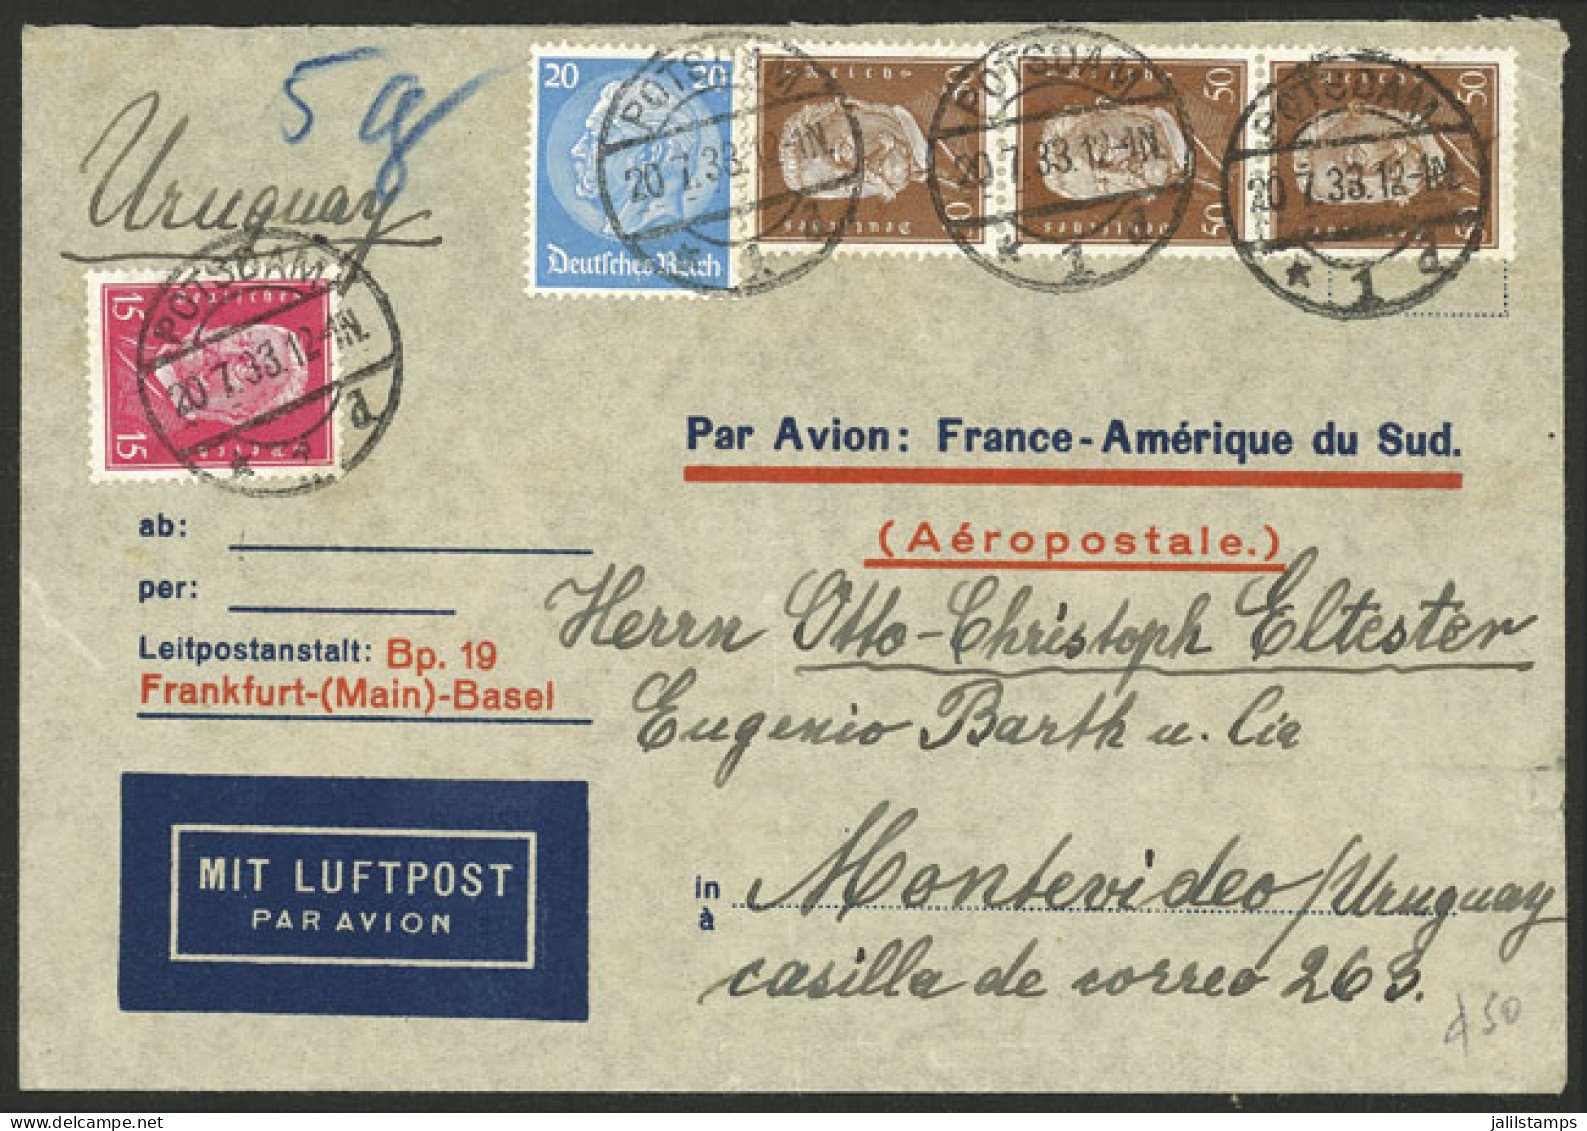 GERMANY: 20/JUL/1933 Postdam - Uruguay, Airmail Cover Sent By Air France Con Franqueo De 1,85Mk., Al Dorso Tiene Tránsit - Lettres & Documents